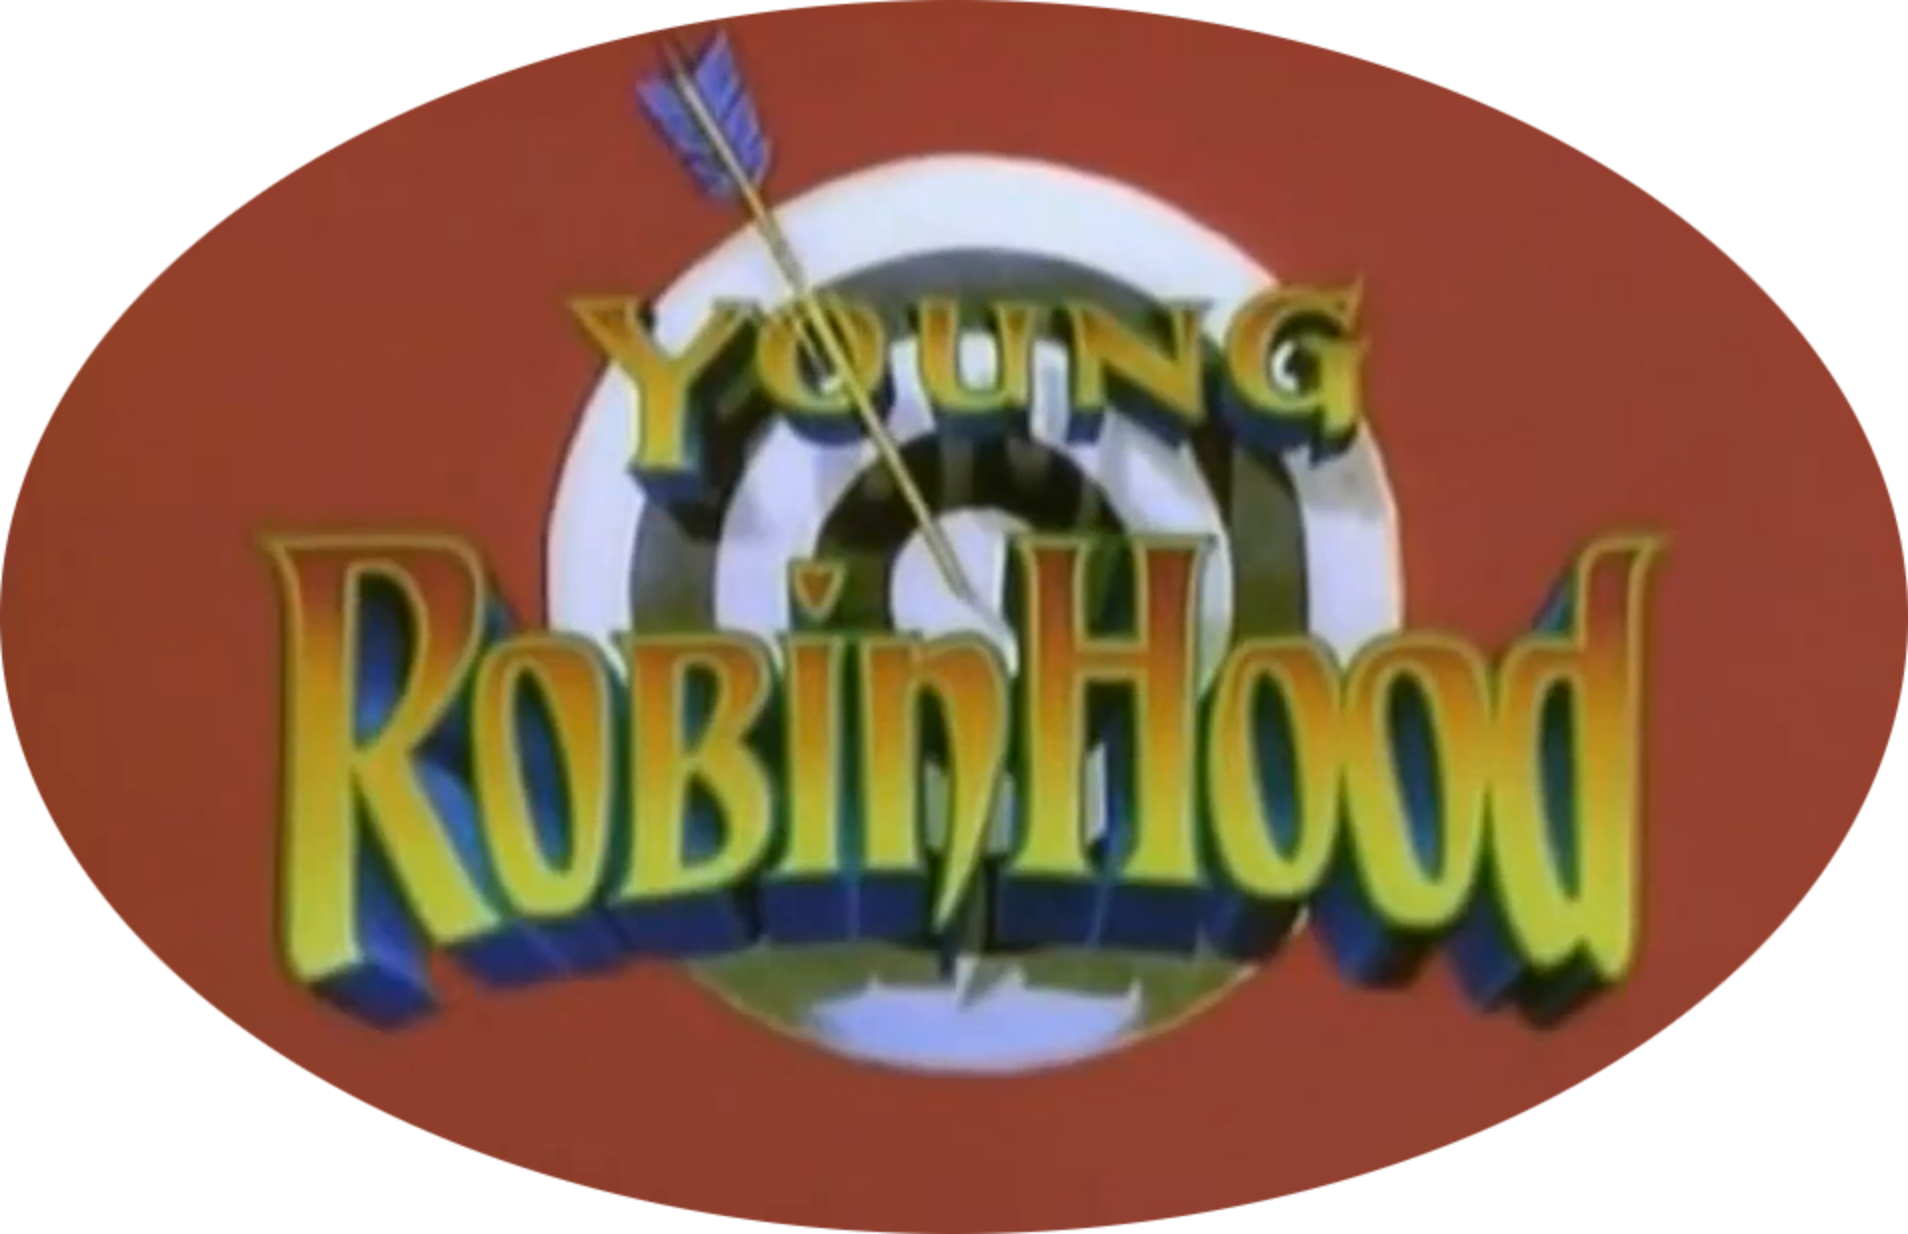 Young Robin Hood (3 DVDs Box Set)